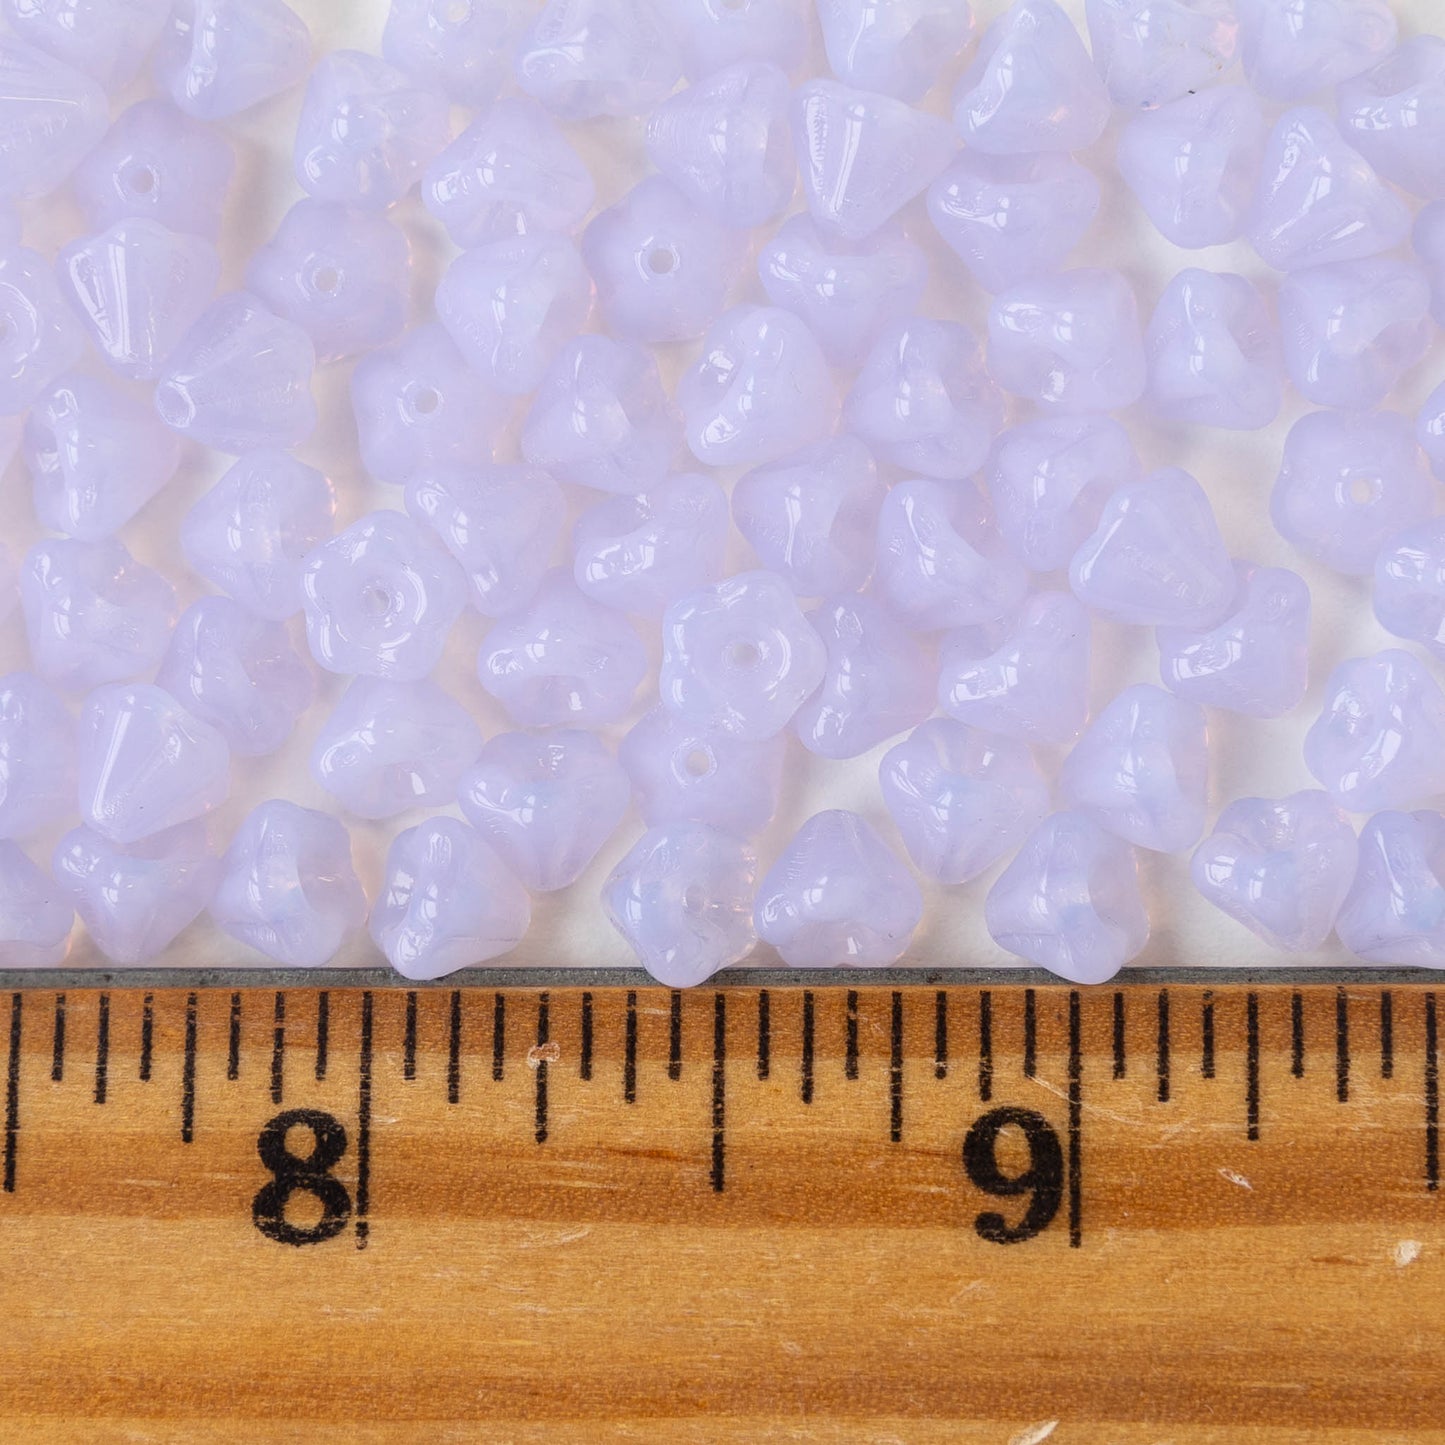 4x6mm Glass Flower Beads - Lavender Opaline - 50